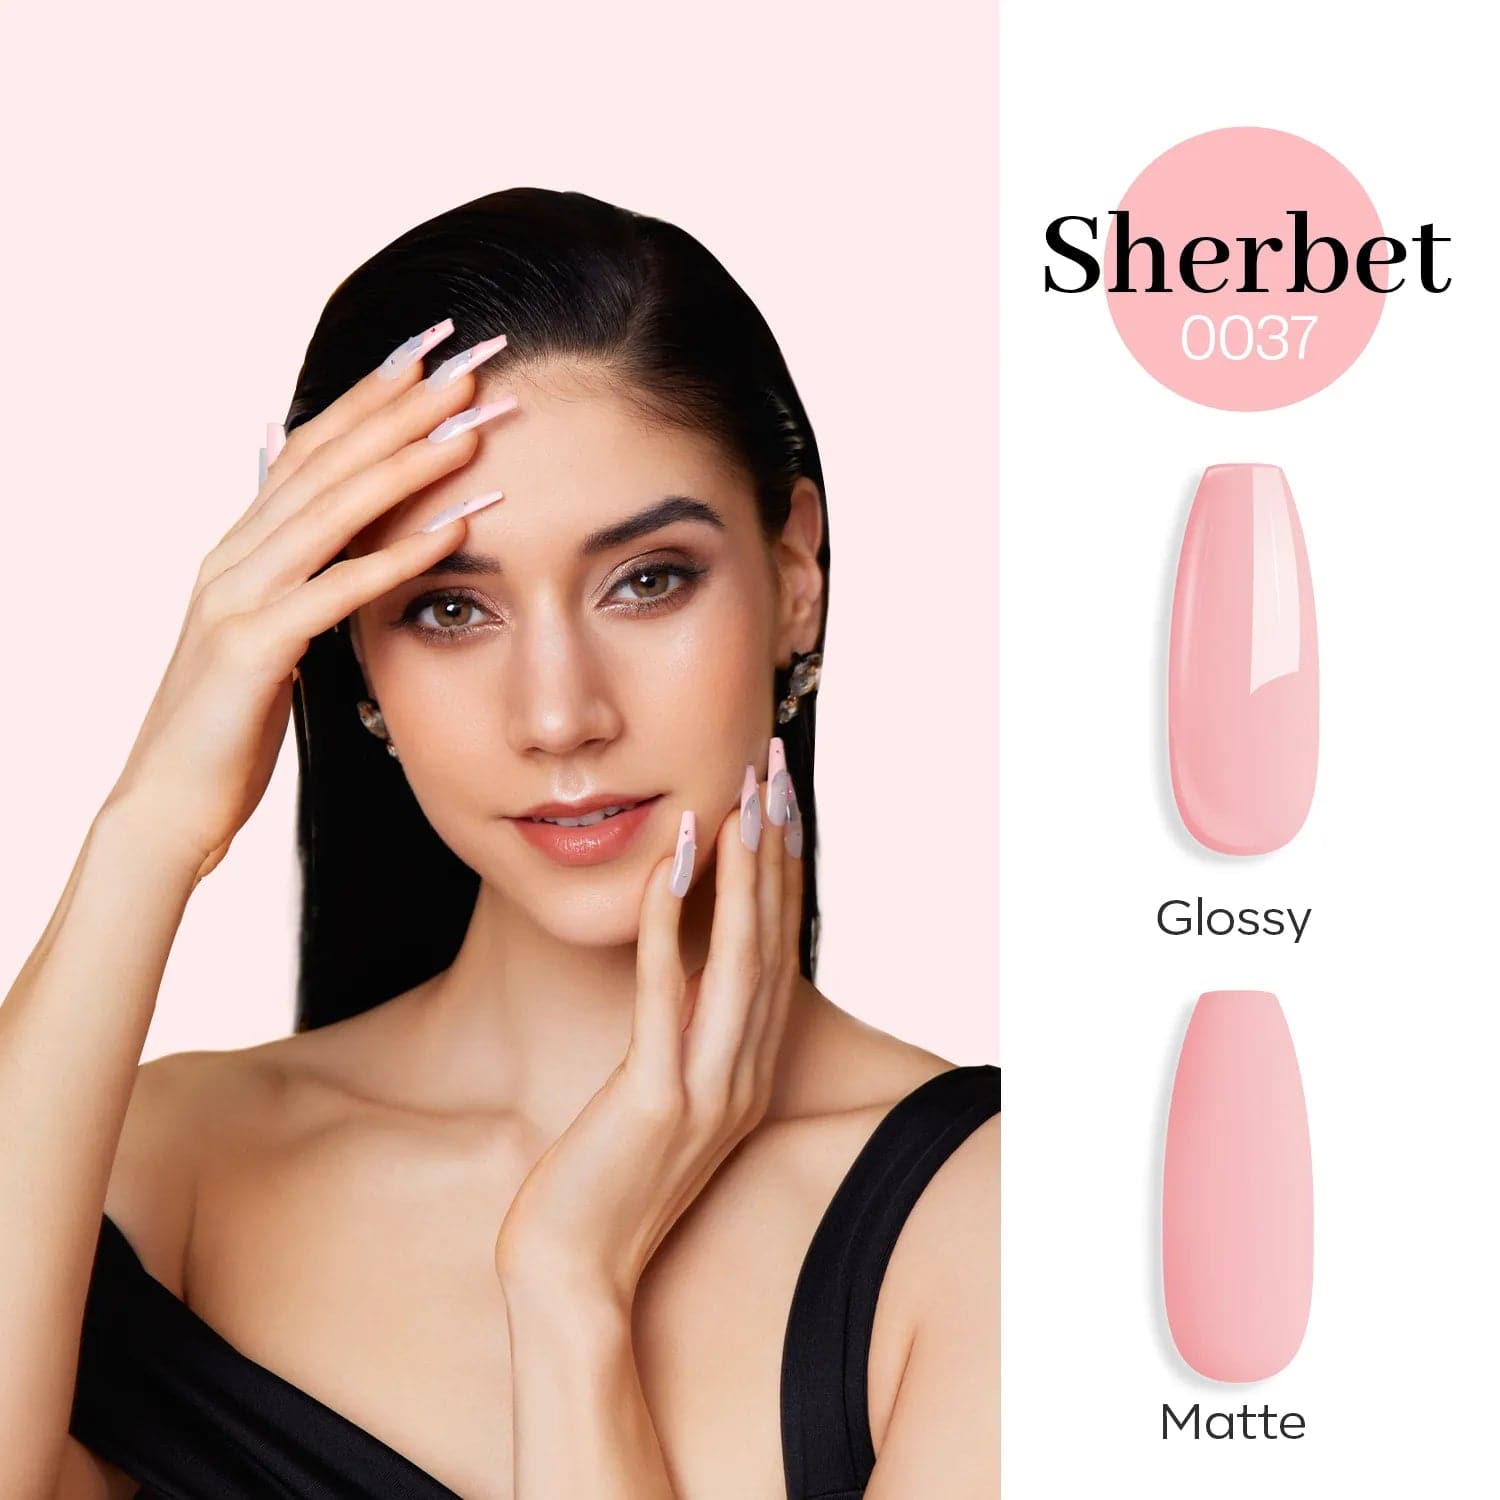 Sherbet - Inspire Gel 15ml - MODELONES.com